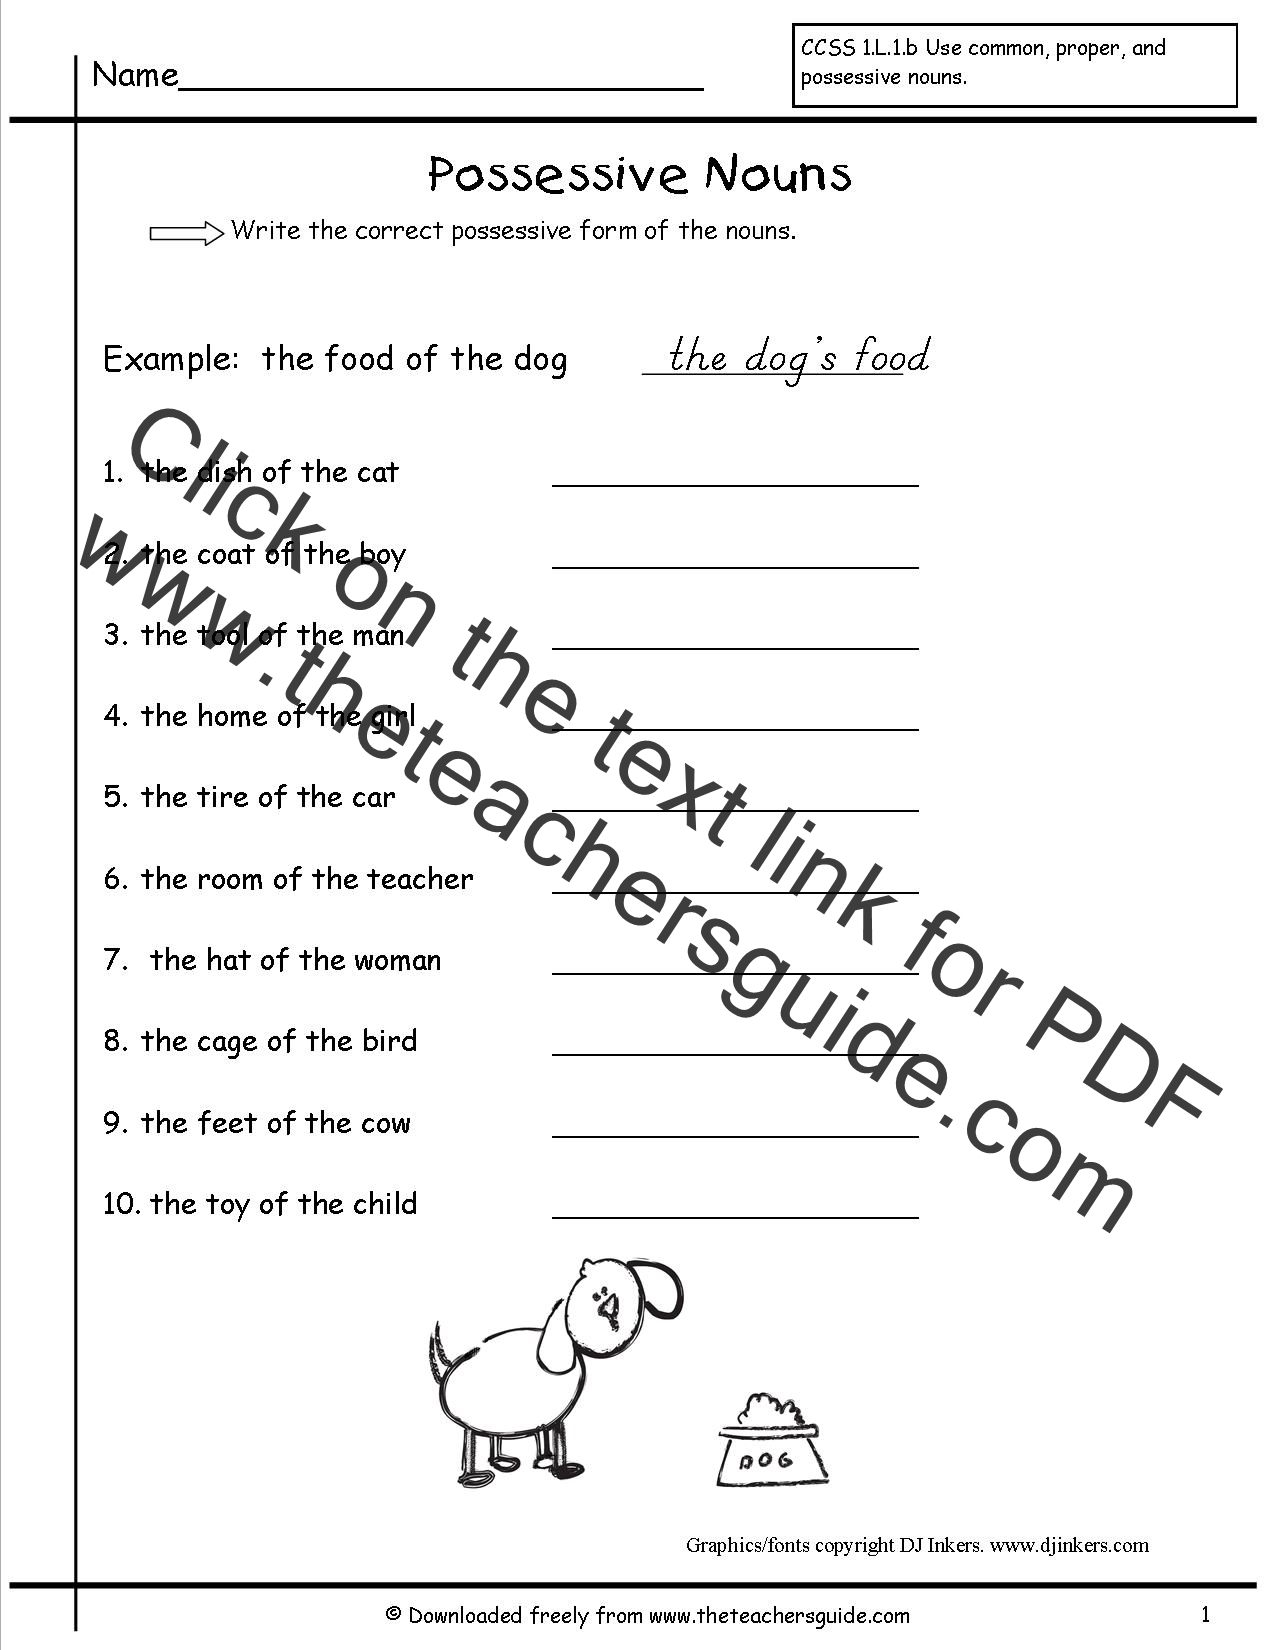 plural-nouns-worksheet-kindergarten-free-download-goodimg-co